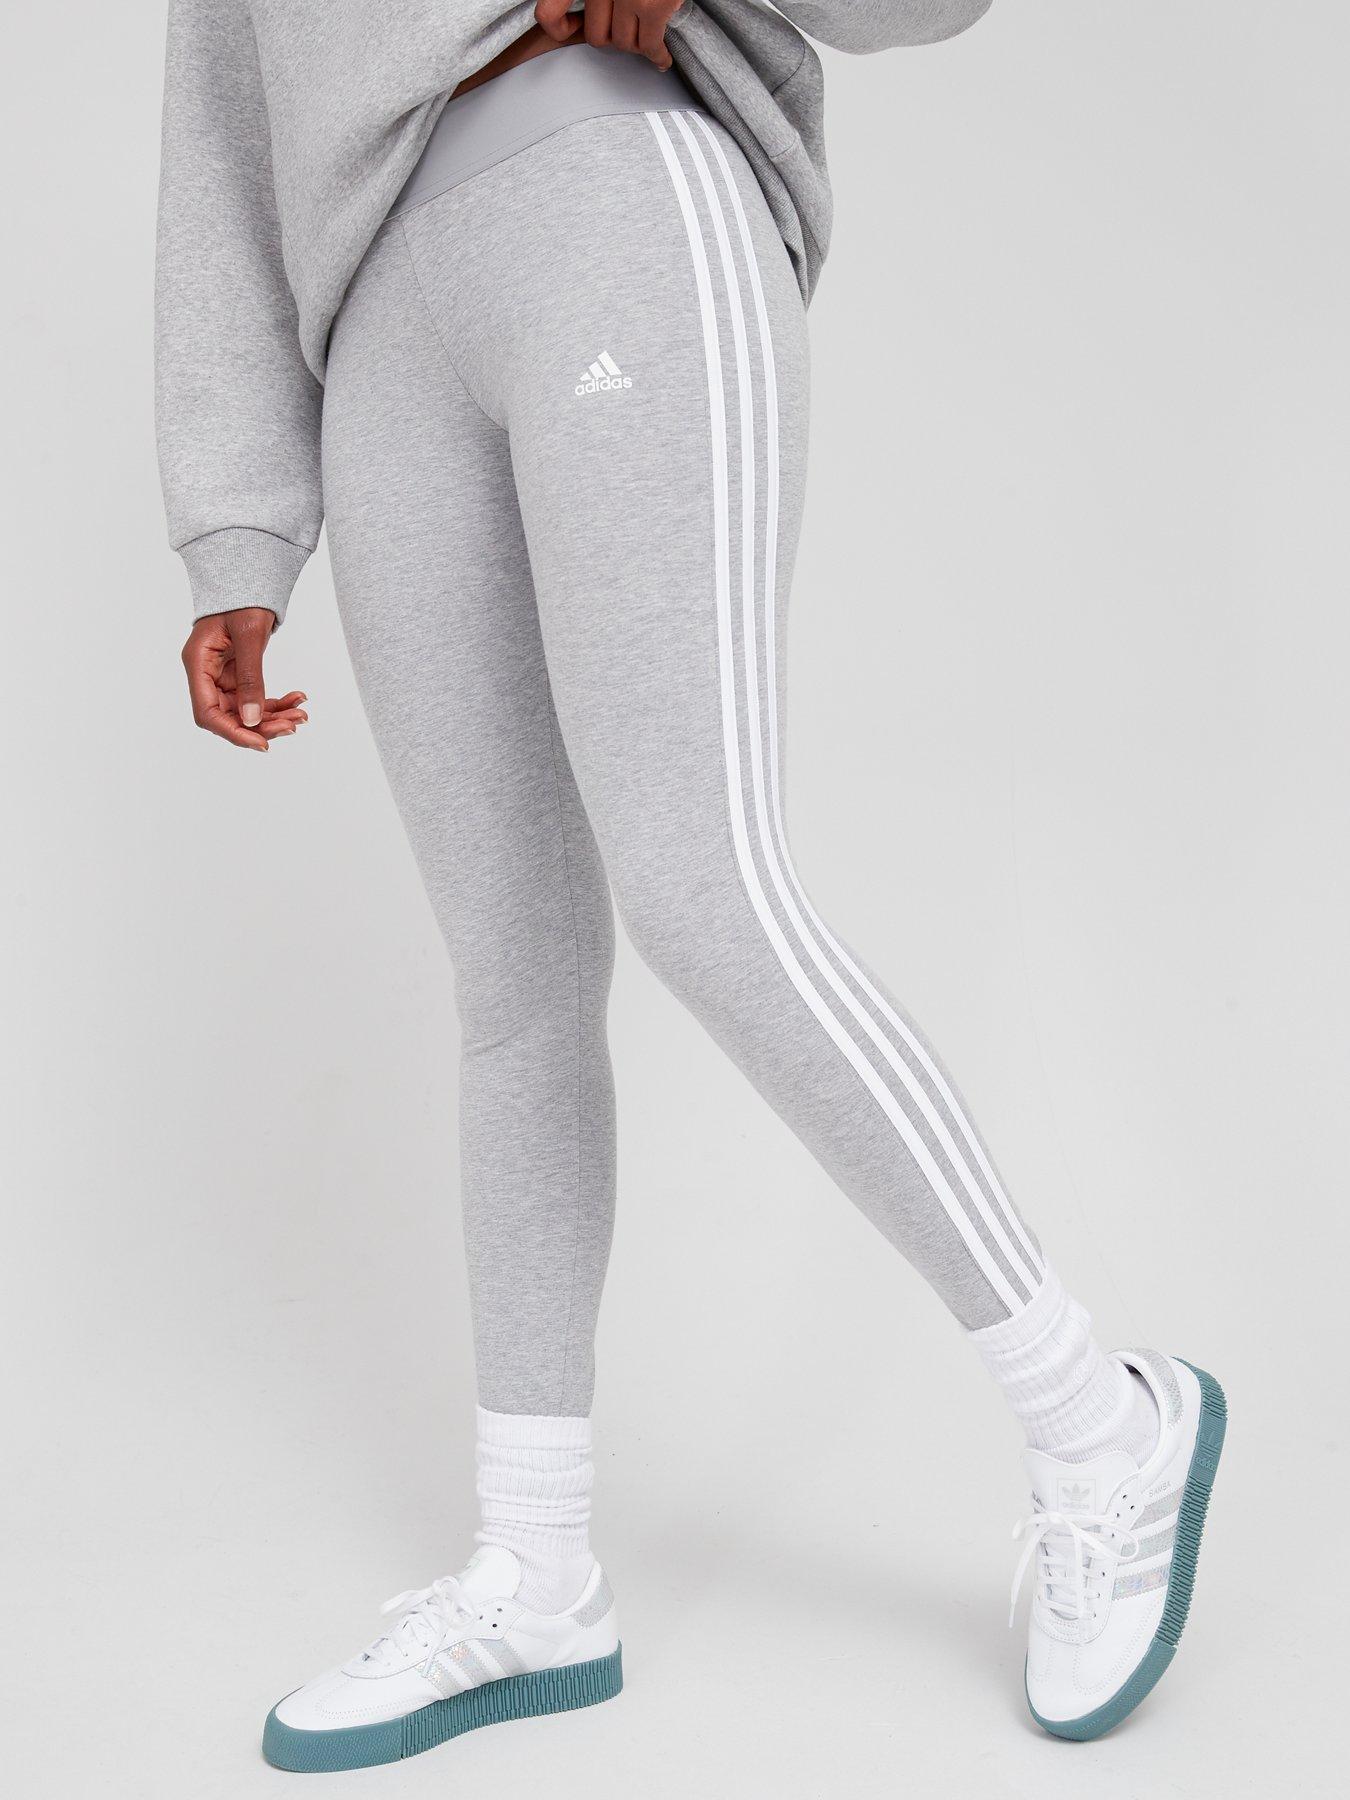  Essentials 3-Stripes Legging - Grey/White